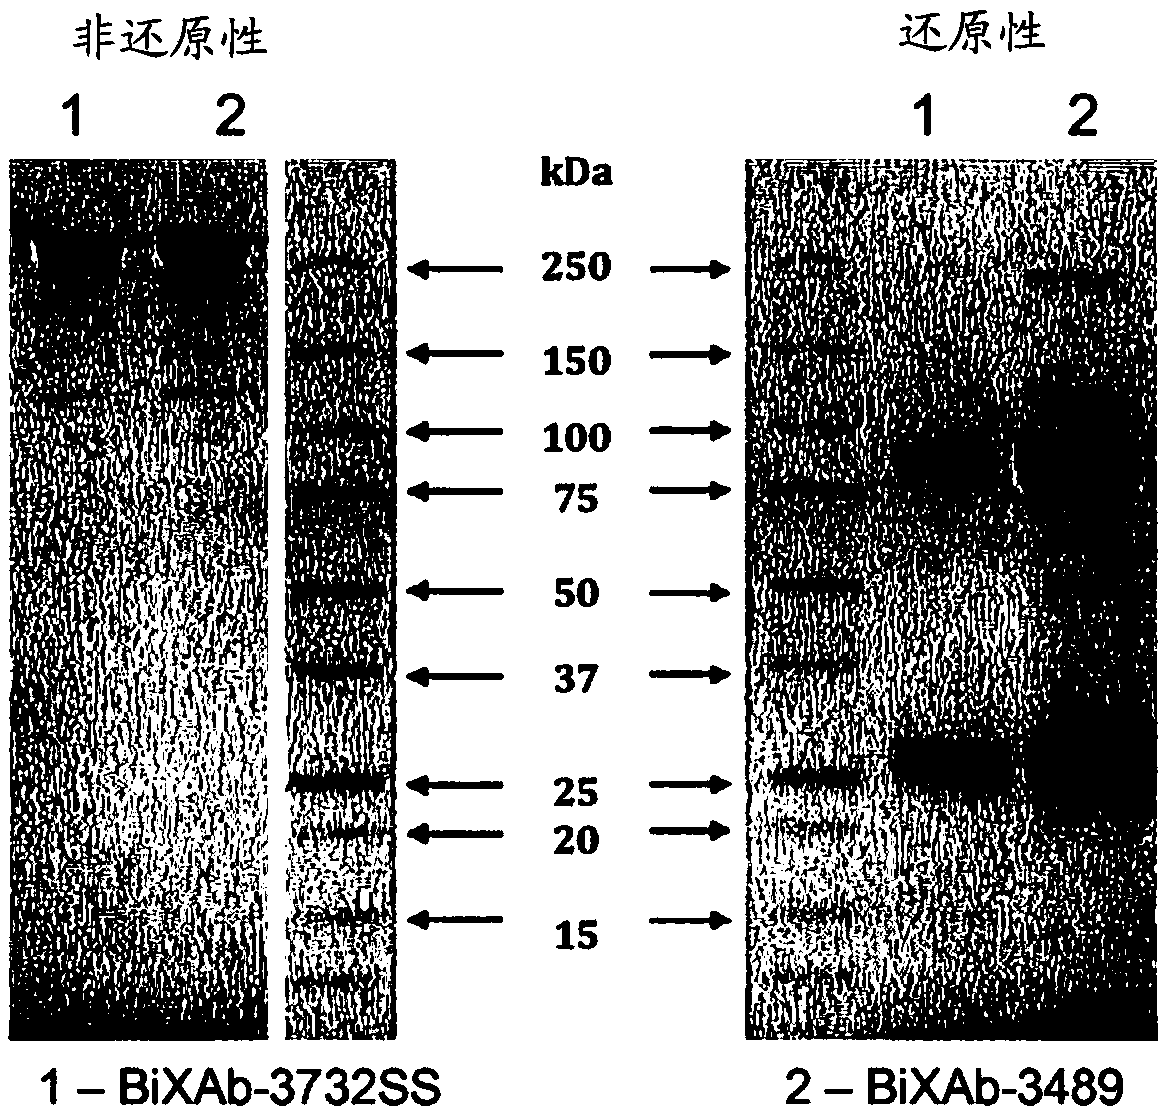 Bispecific antibodies targeting EGFR and HER2